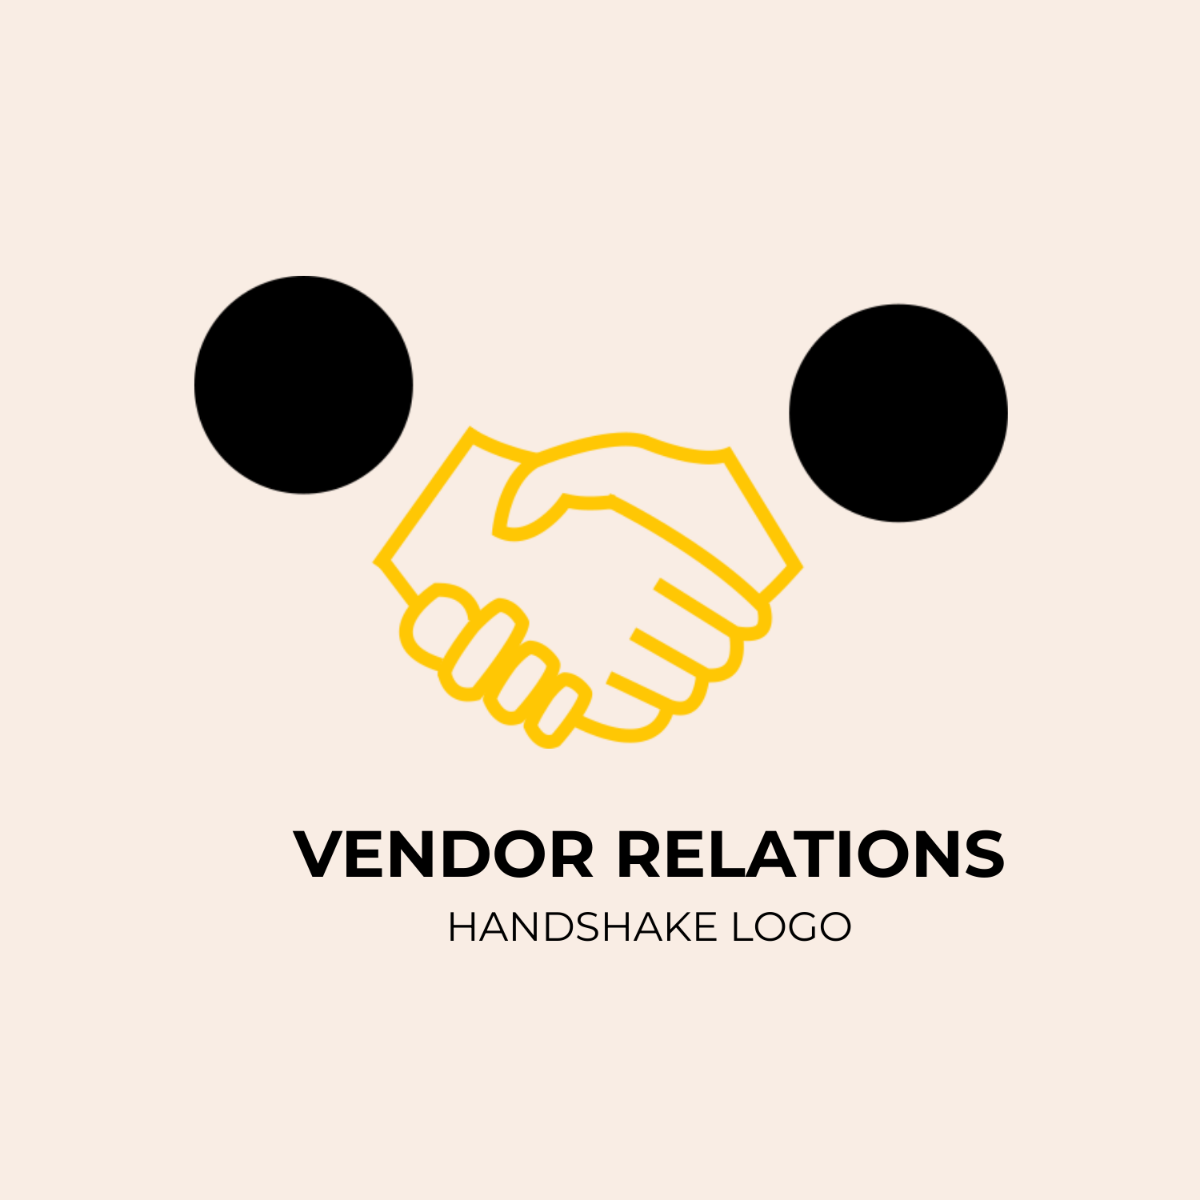 Free Vendor Relations Handshake Logo Template